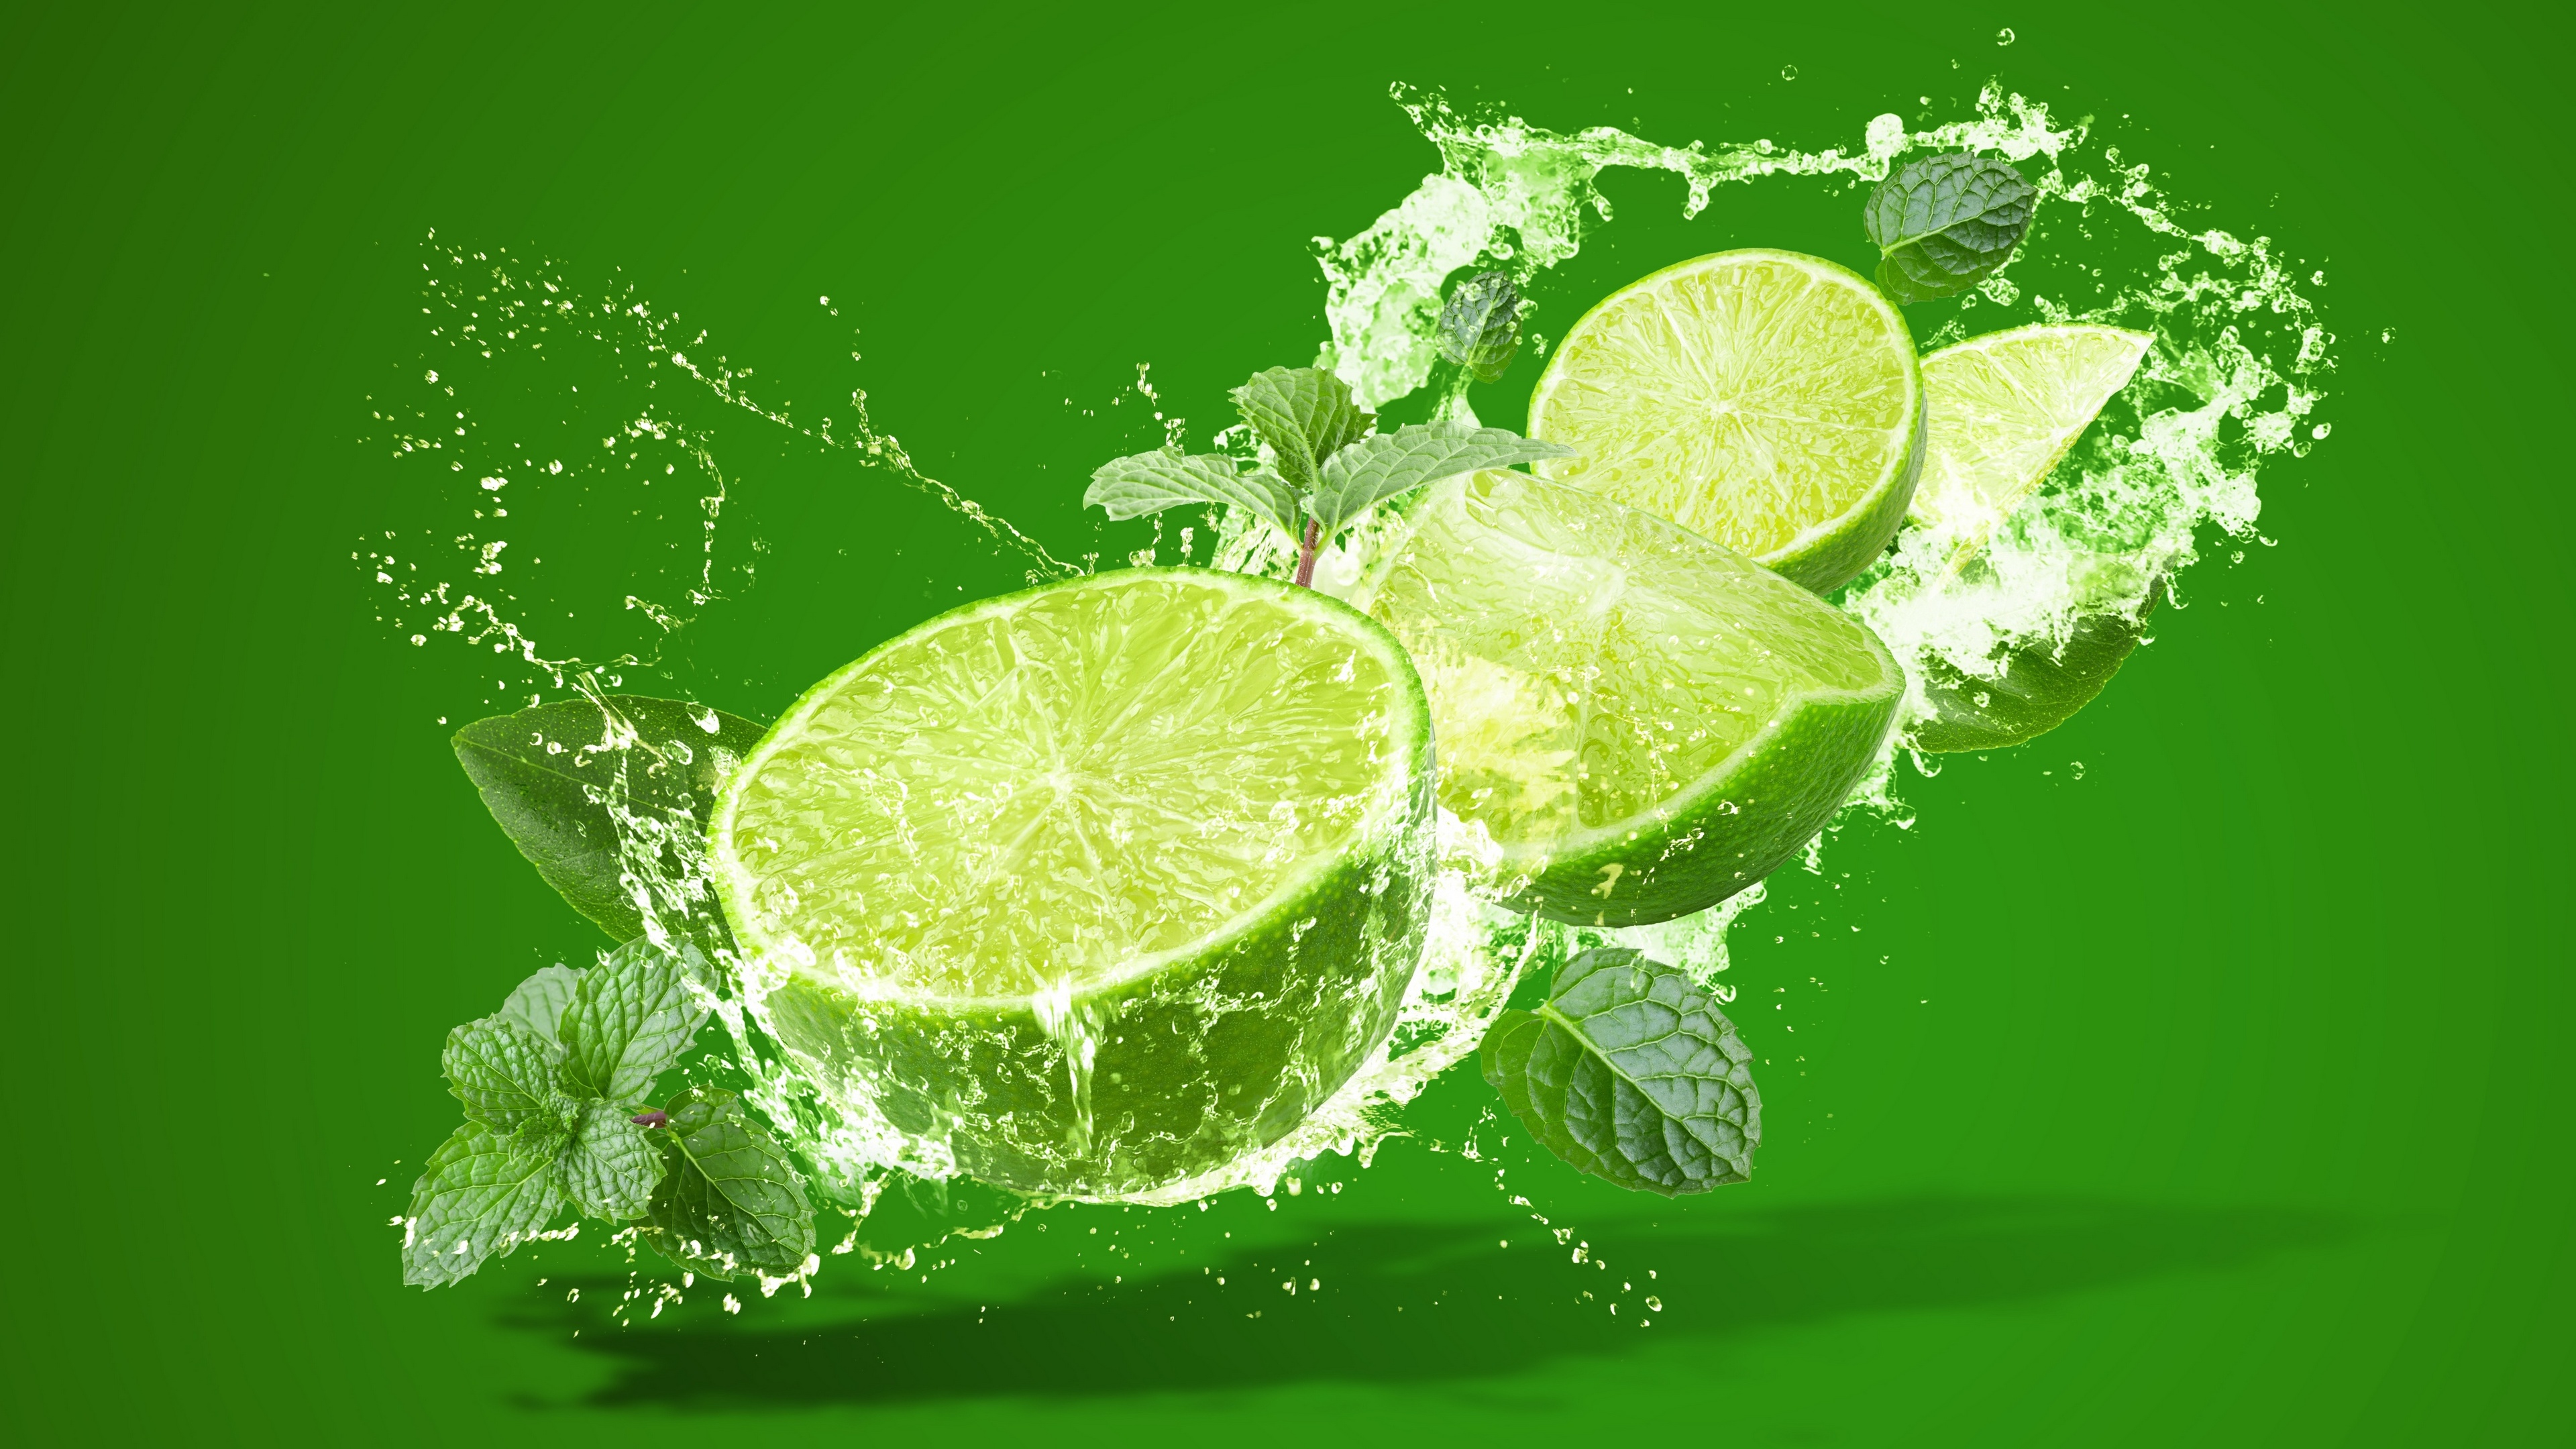 General 3840x2160 splashes water digital art fruit minimalism simple background green background leaves